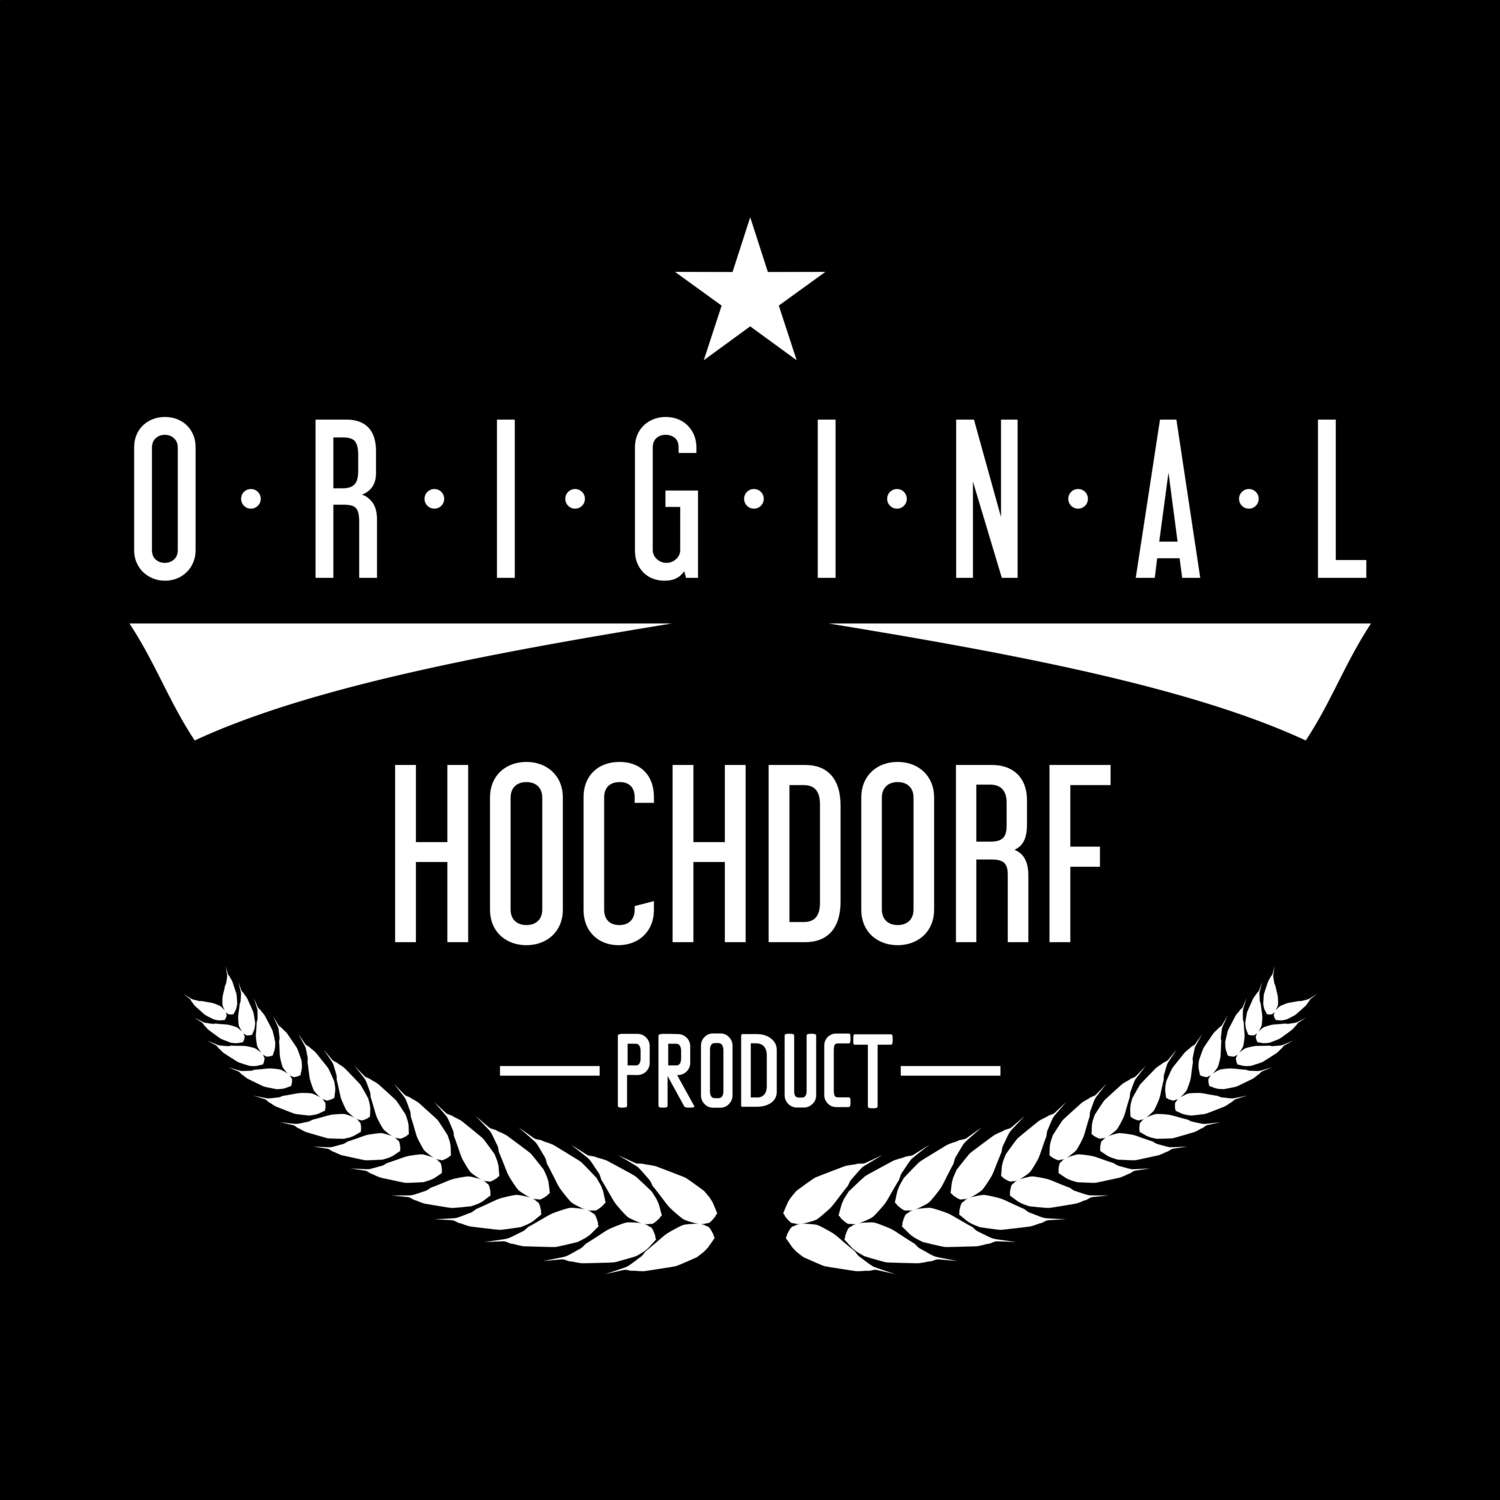 Hochdorf T-Shirt »Original Product«